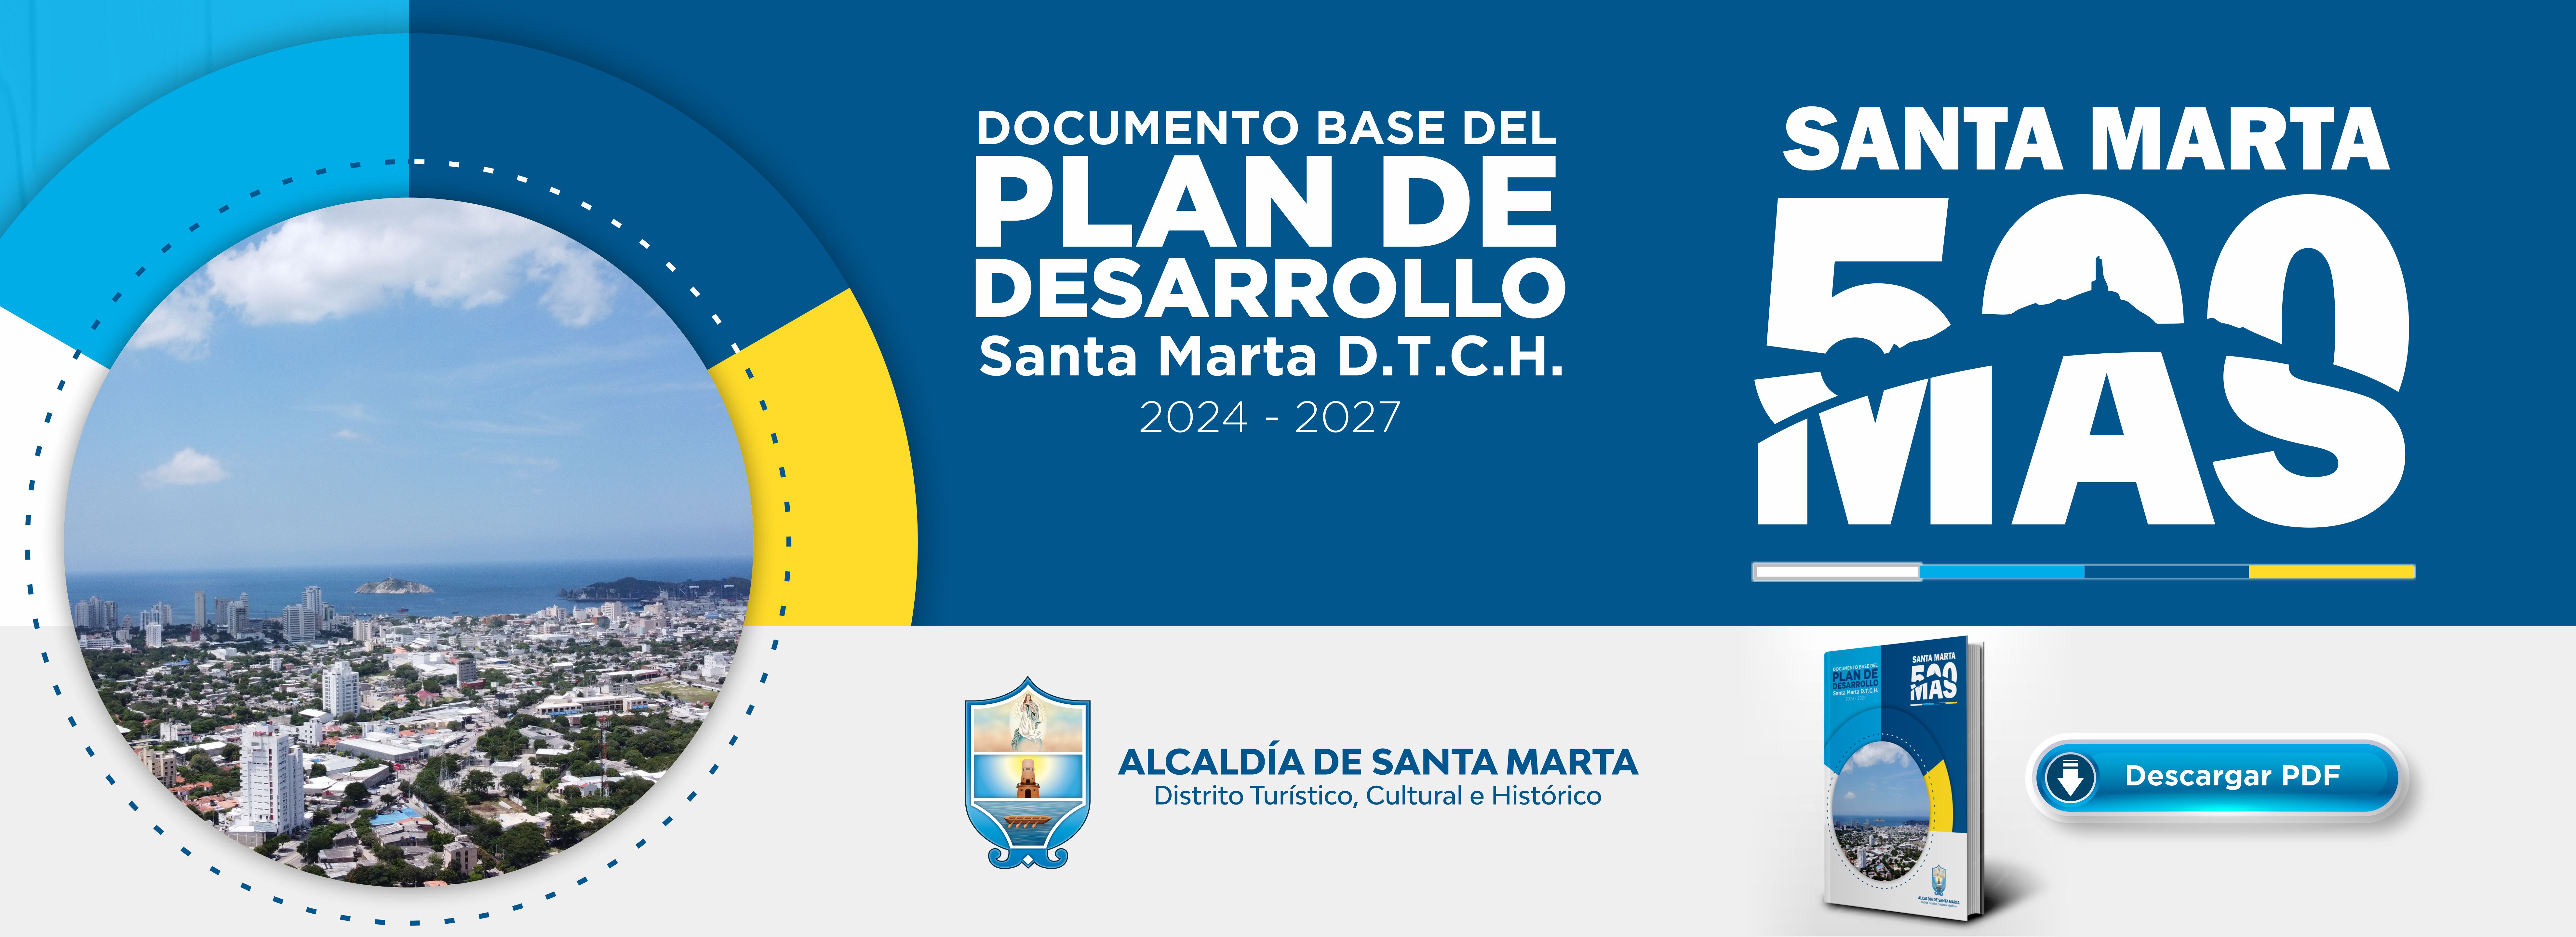 https://www.santamarta.gov.co/sites/default/files/revslider/image/banner%20plan%20de%20desarrollo%20500.jpg